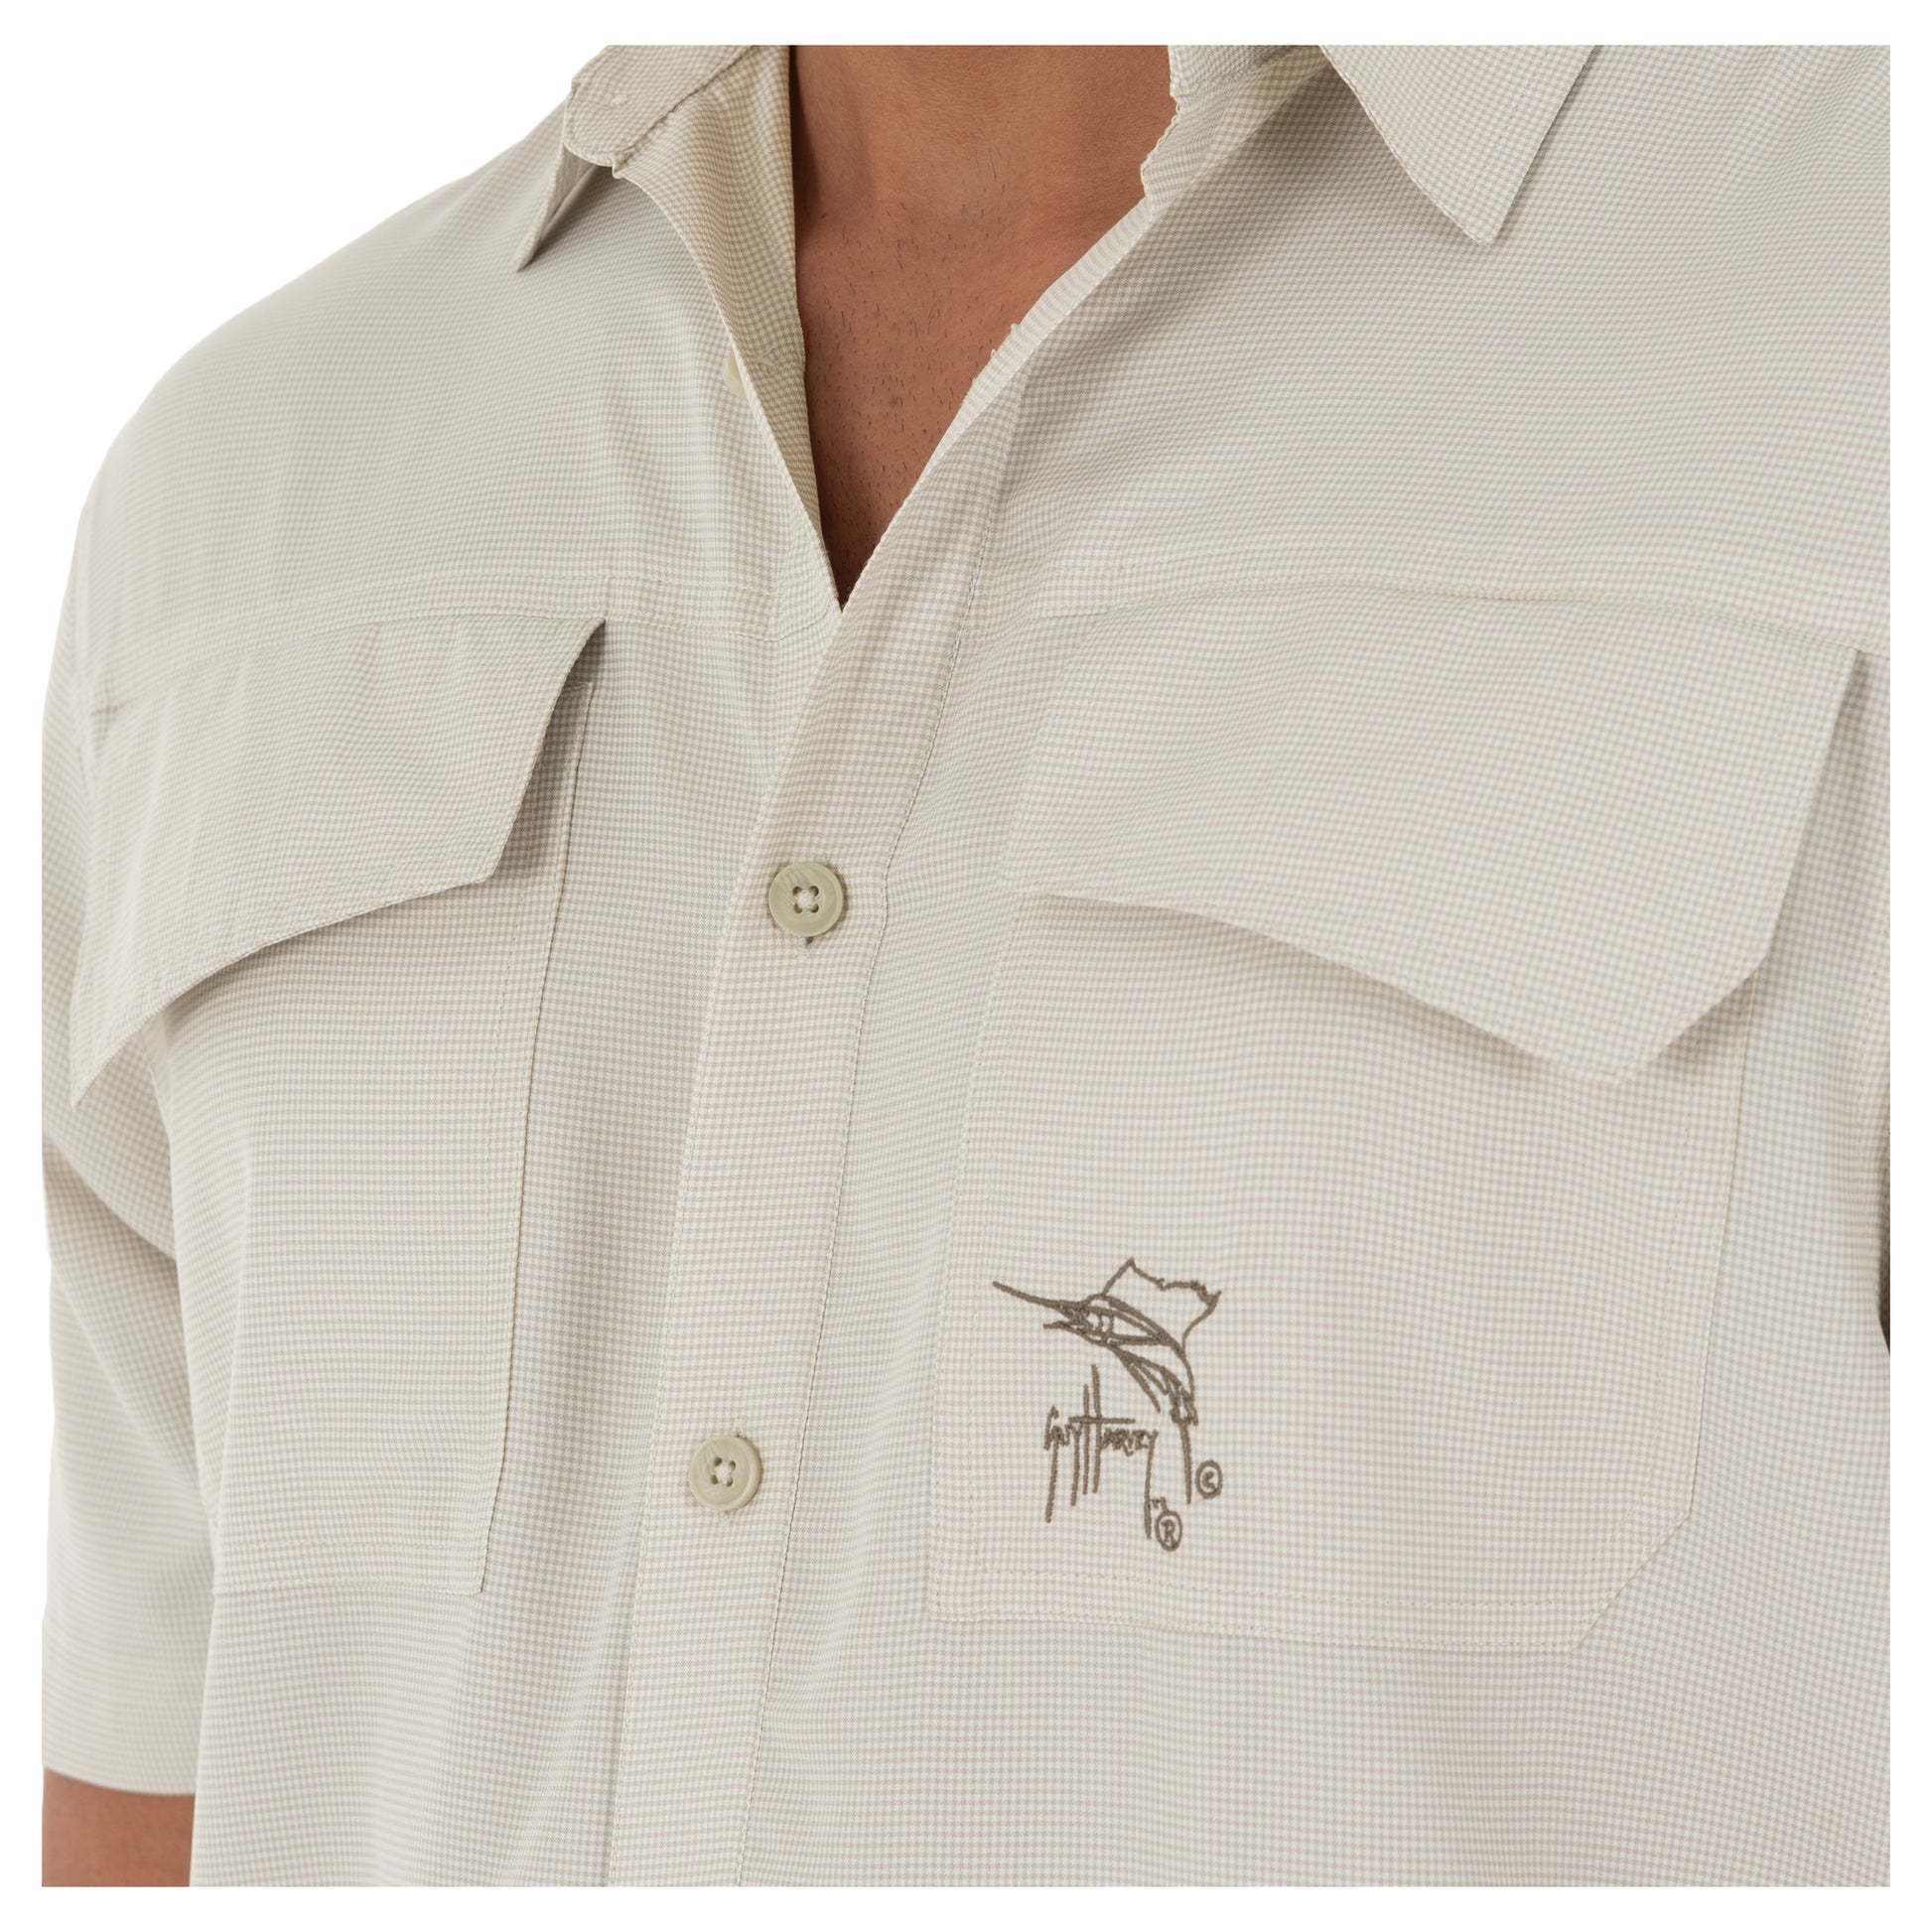 Men's Short Sleeve Texture Gingham Khaki Performance Fishing Shirt View 3